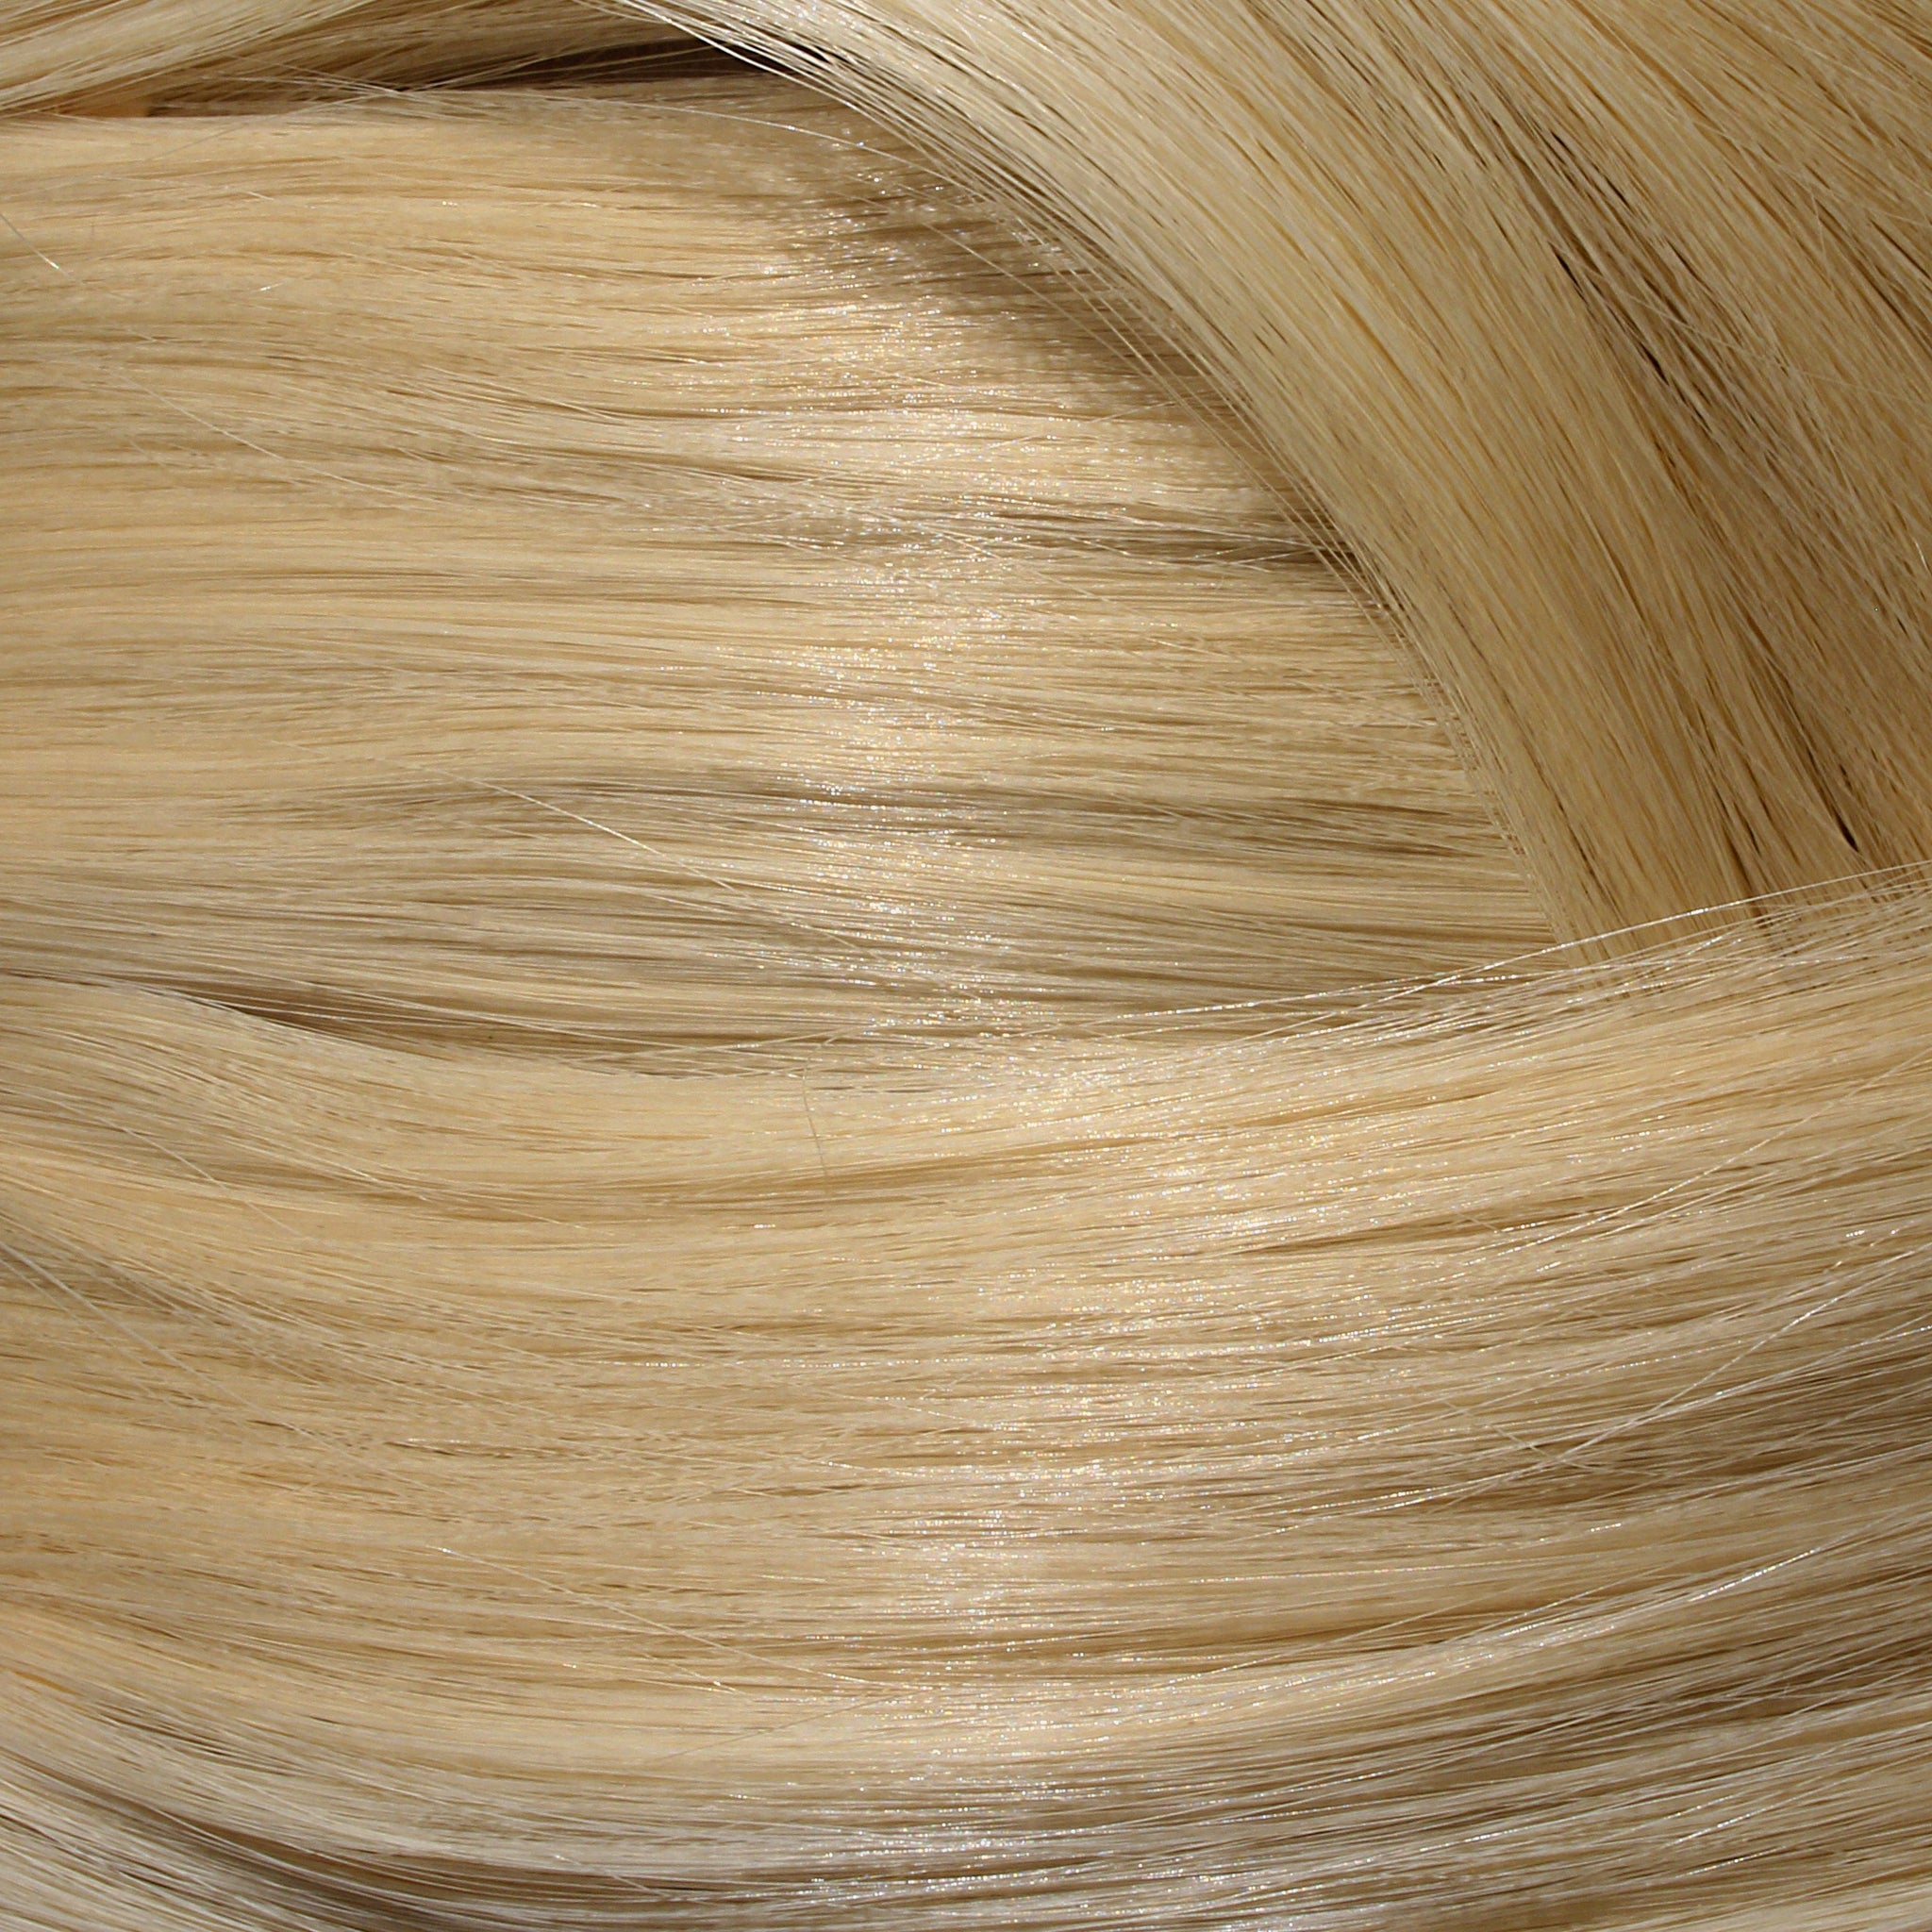 9 Very Light Blonde Permanent Hair My Hairdresser Online – Hairdresser